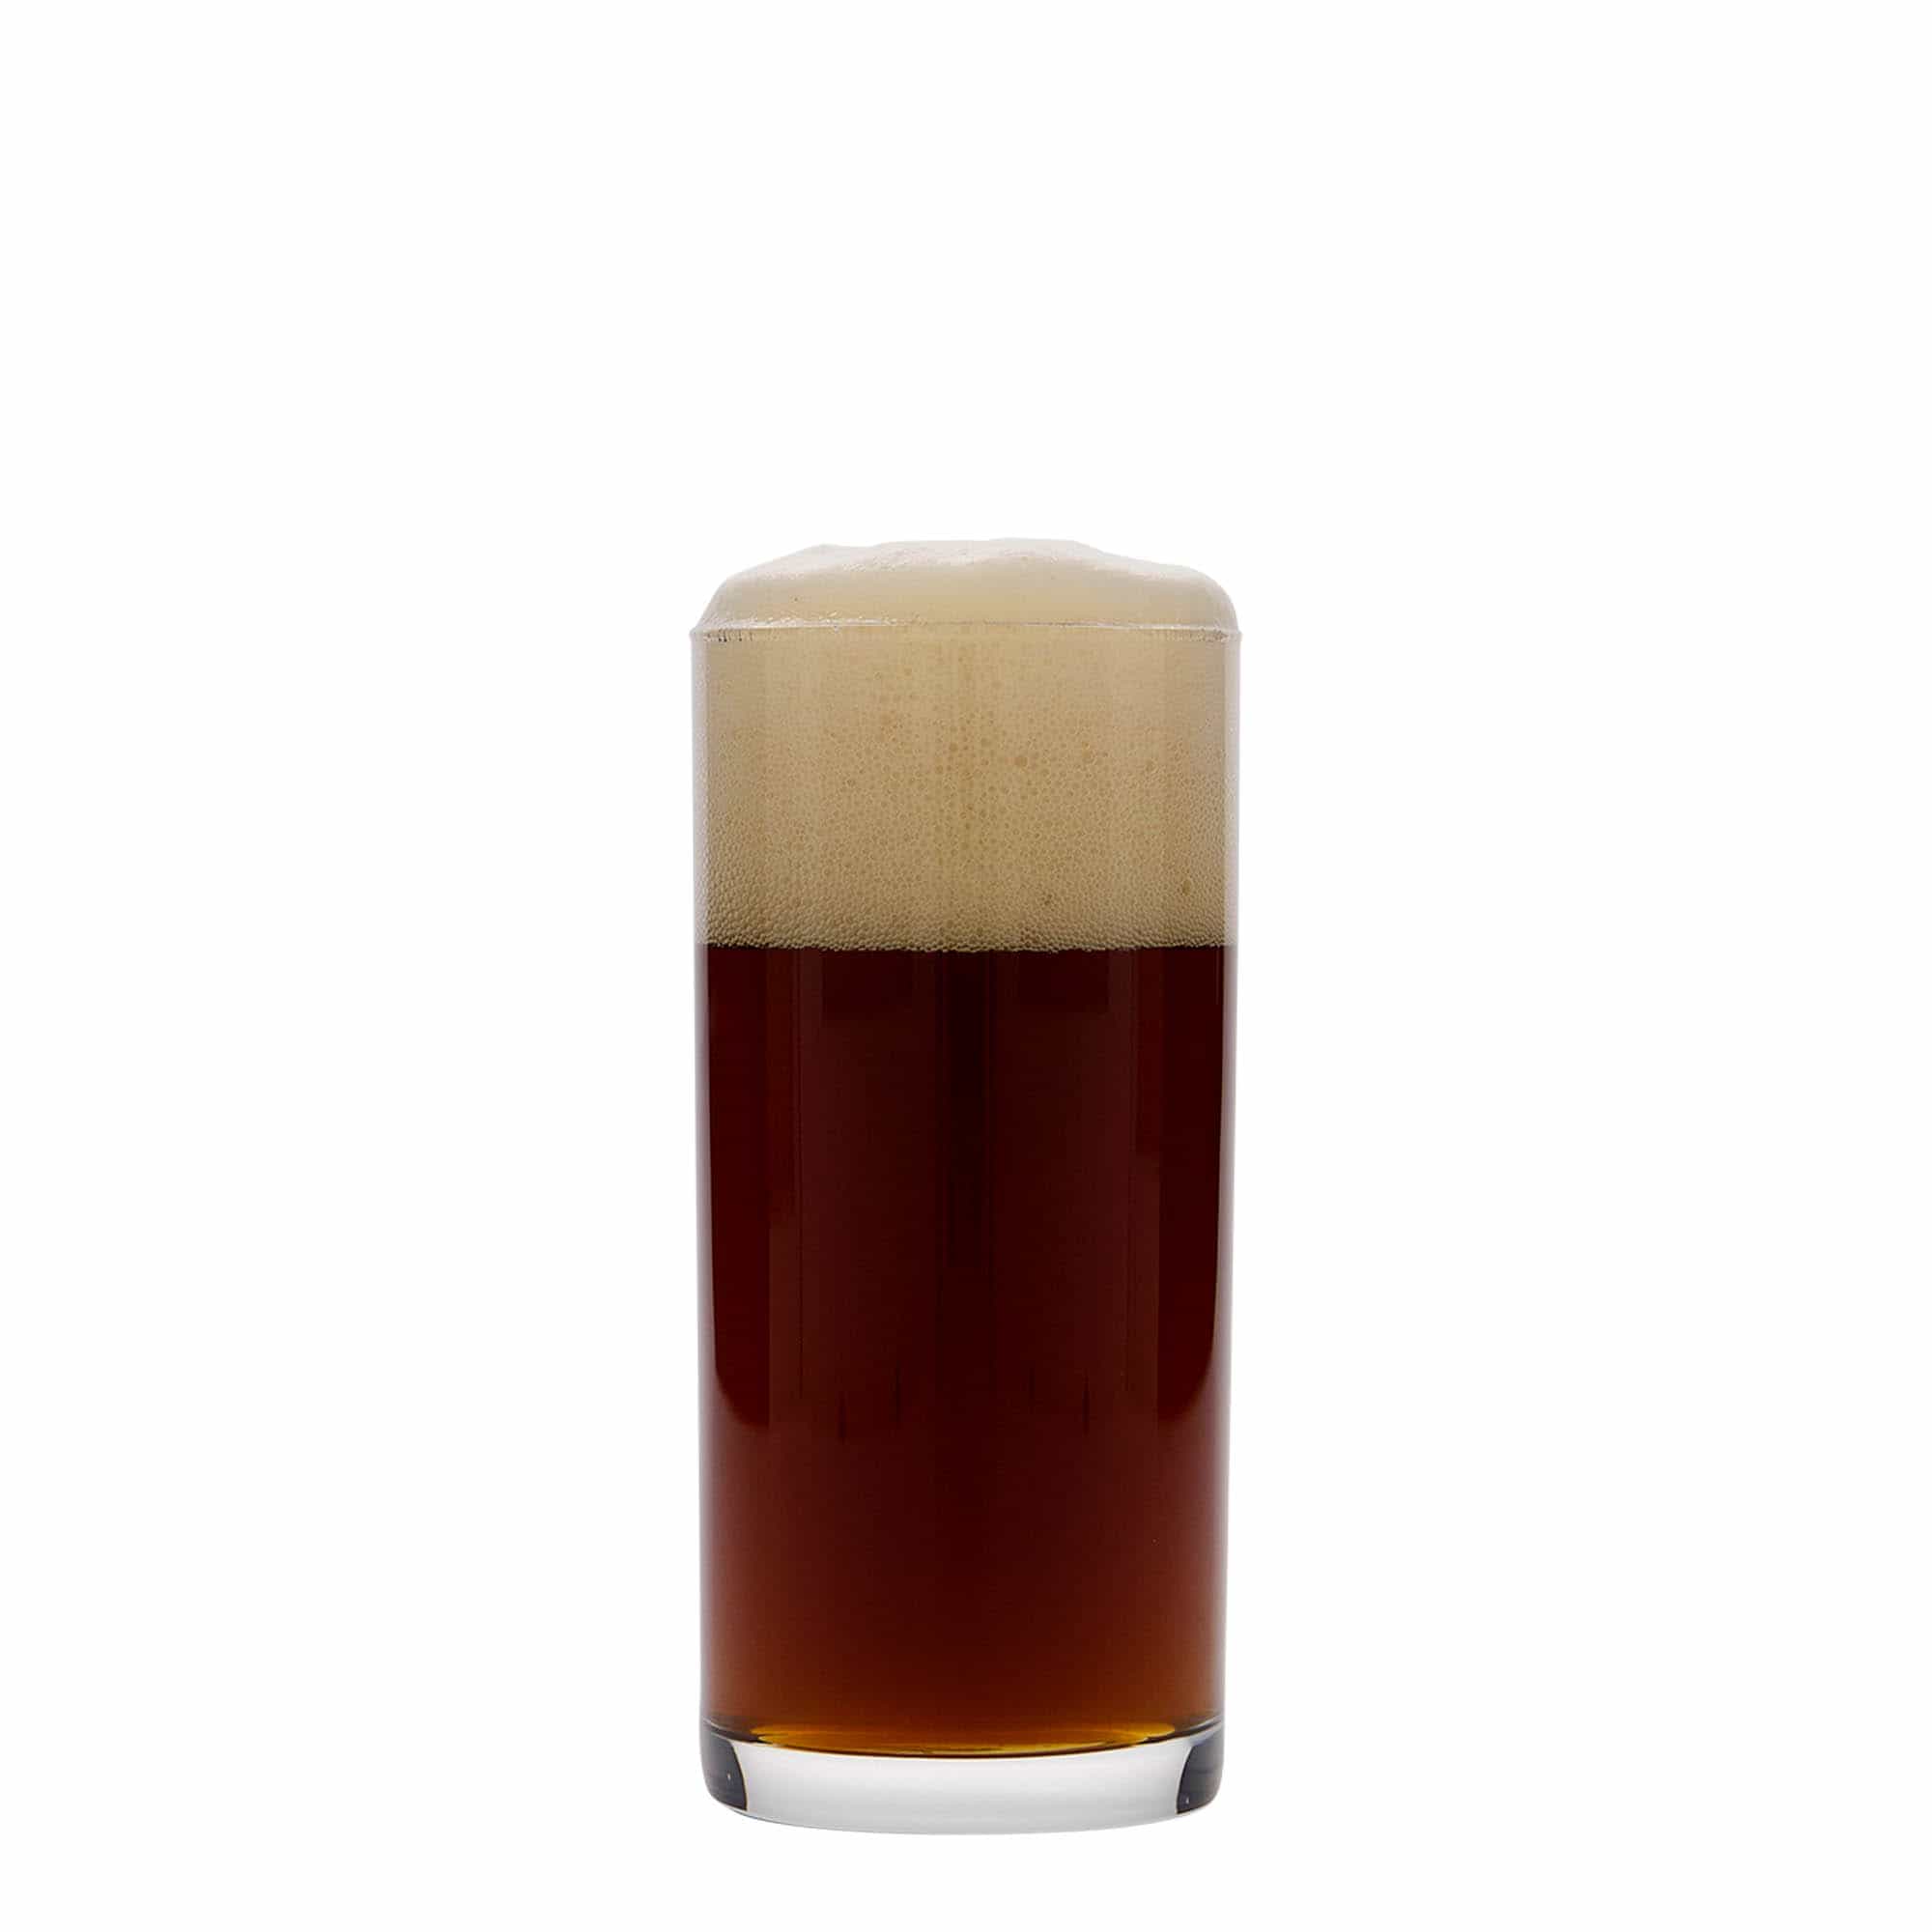 200 ml dricksglas 'Altbier', glas